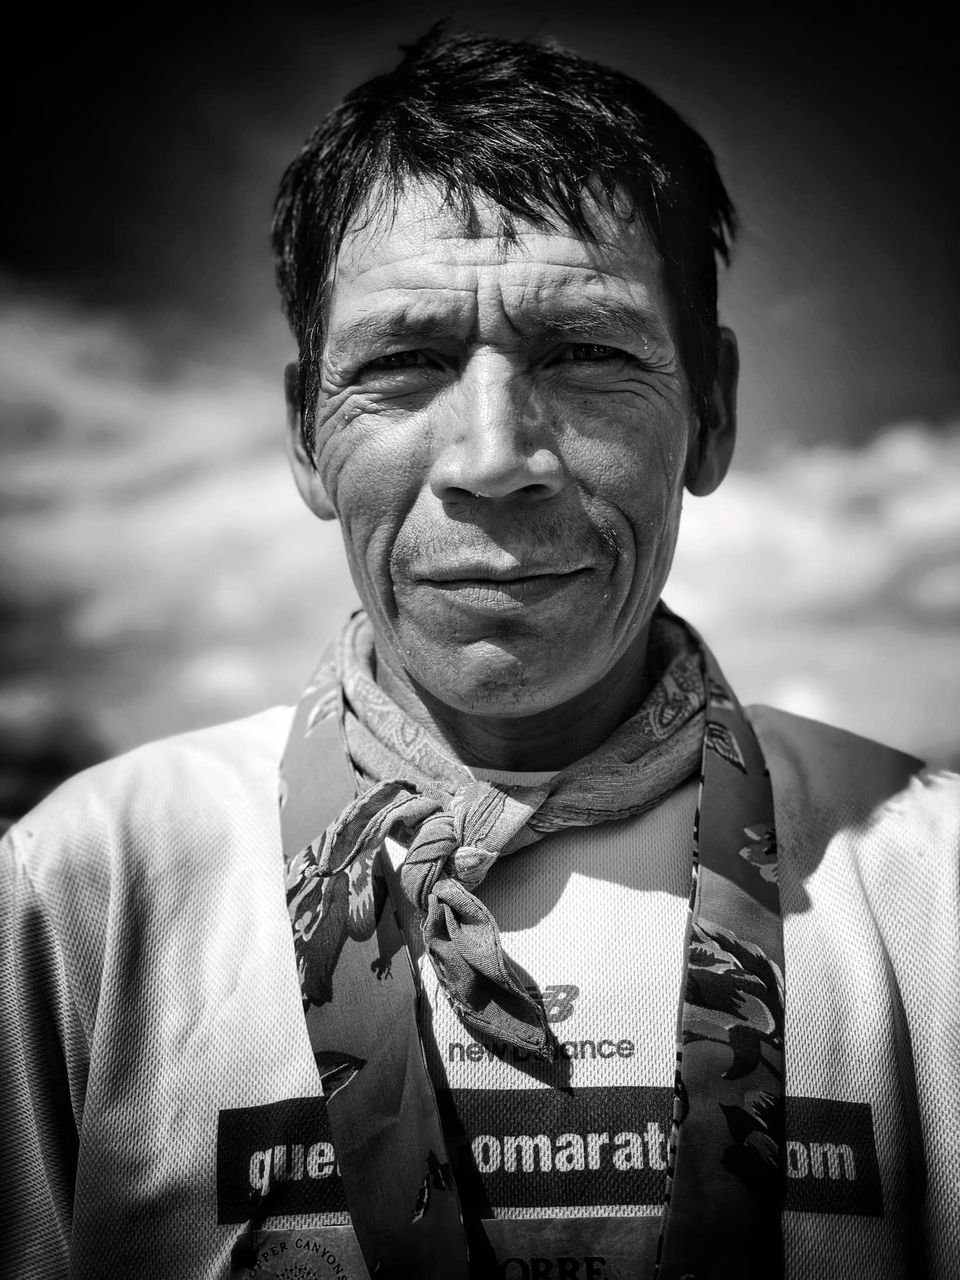 Juan Contrares Raramuri Tarahumara runner